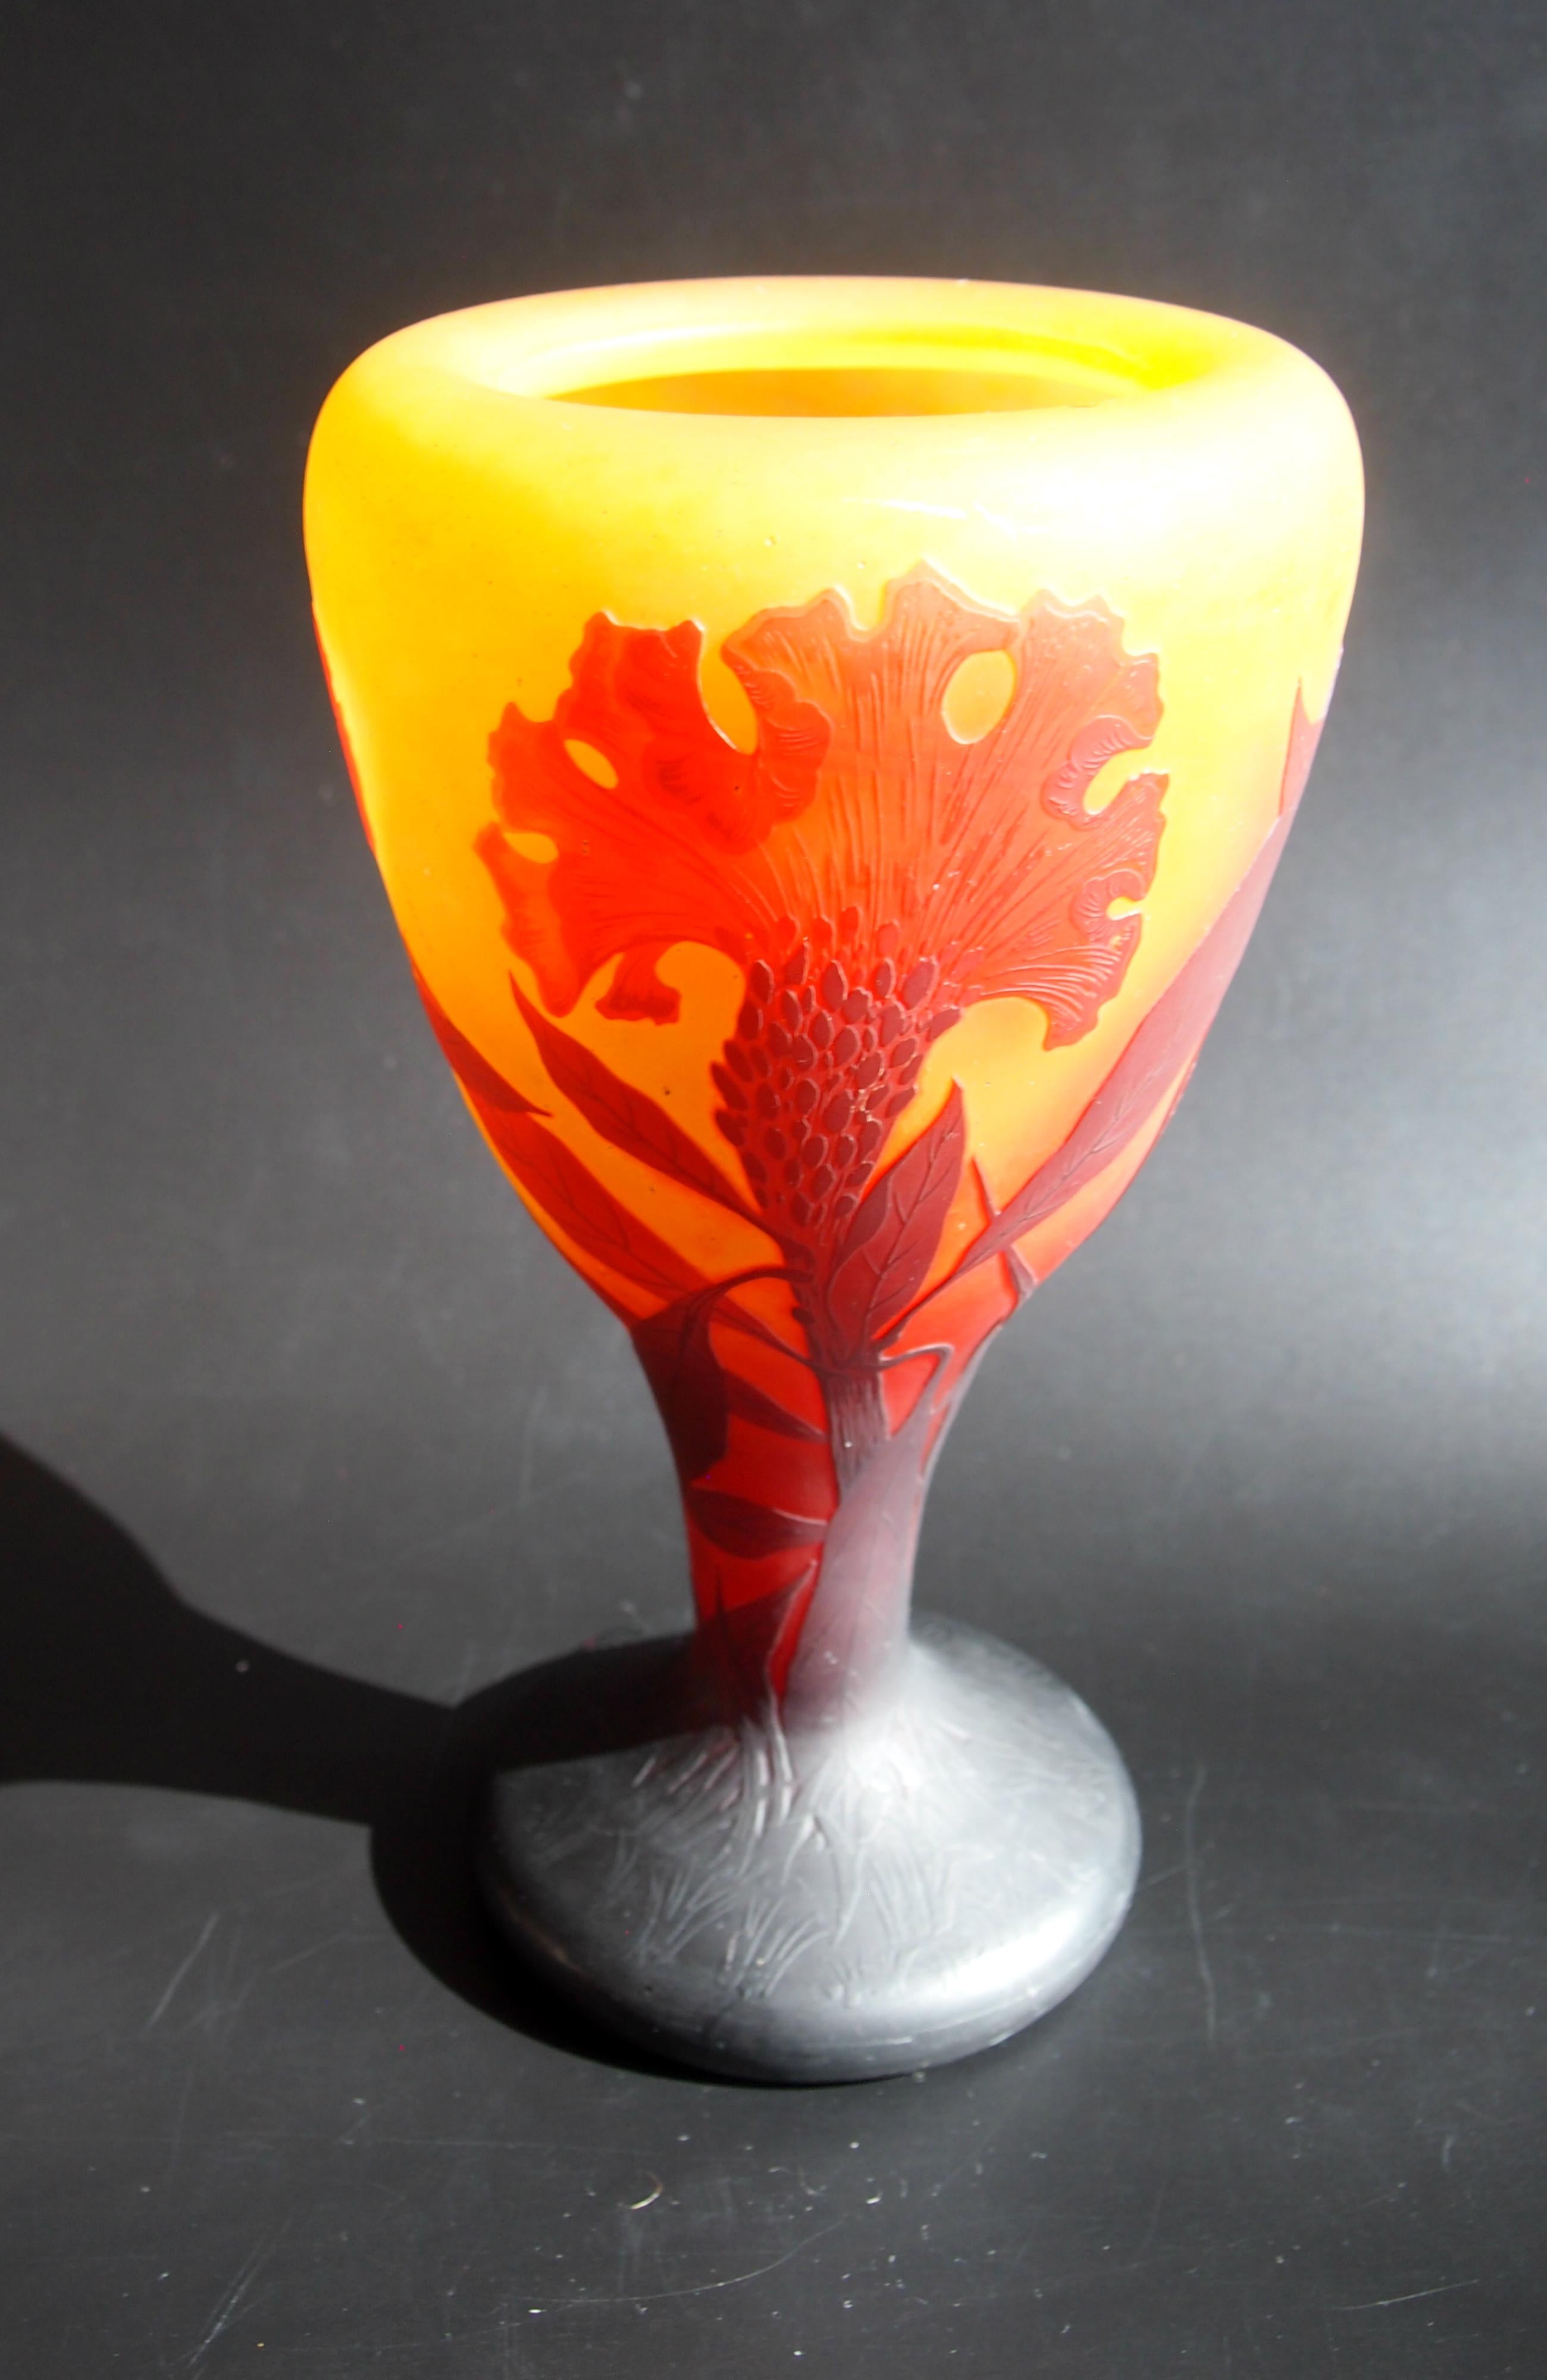 Art Glass French Art Nouveau Daum Cameo Glass Cockscomb Vase 1900 For Sale